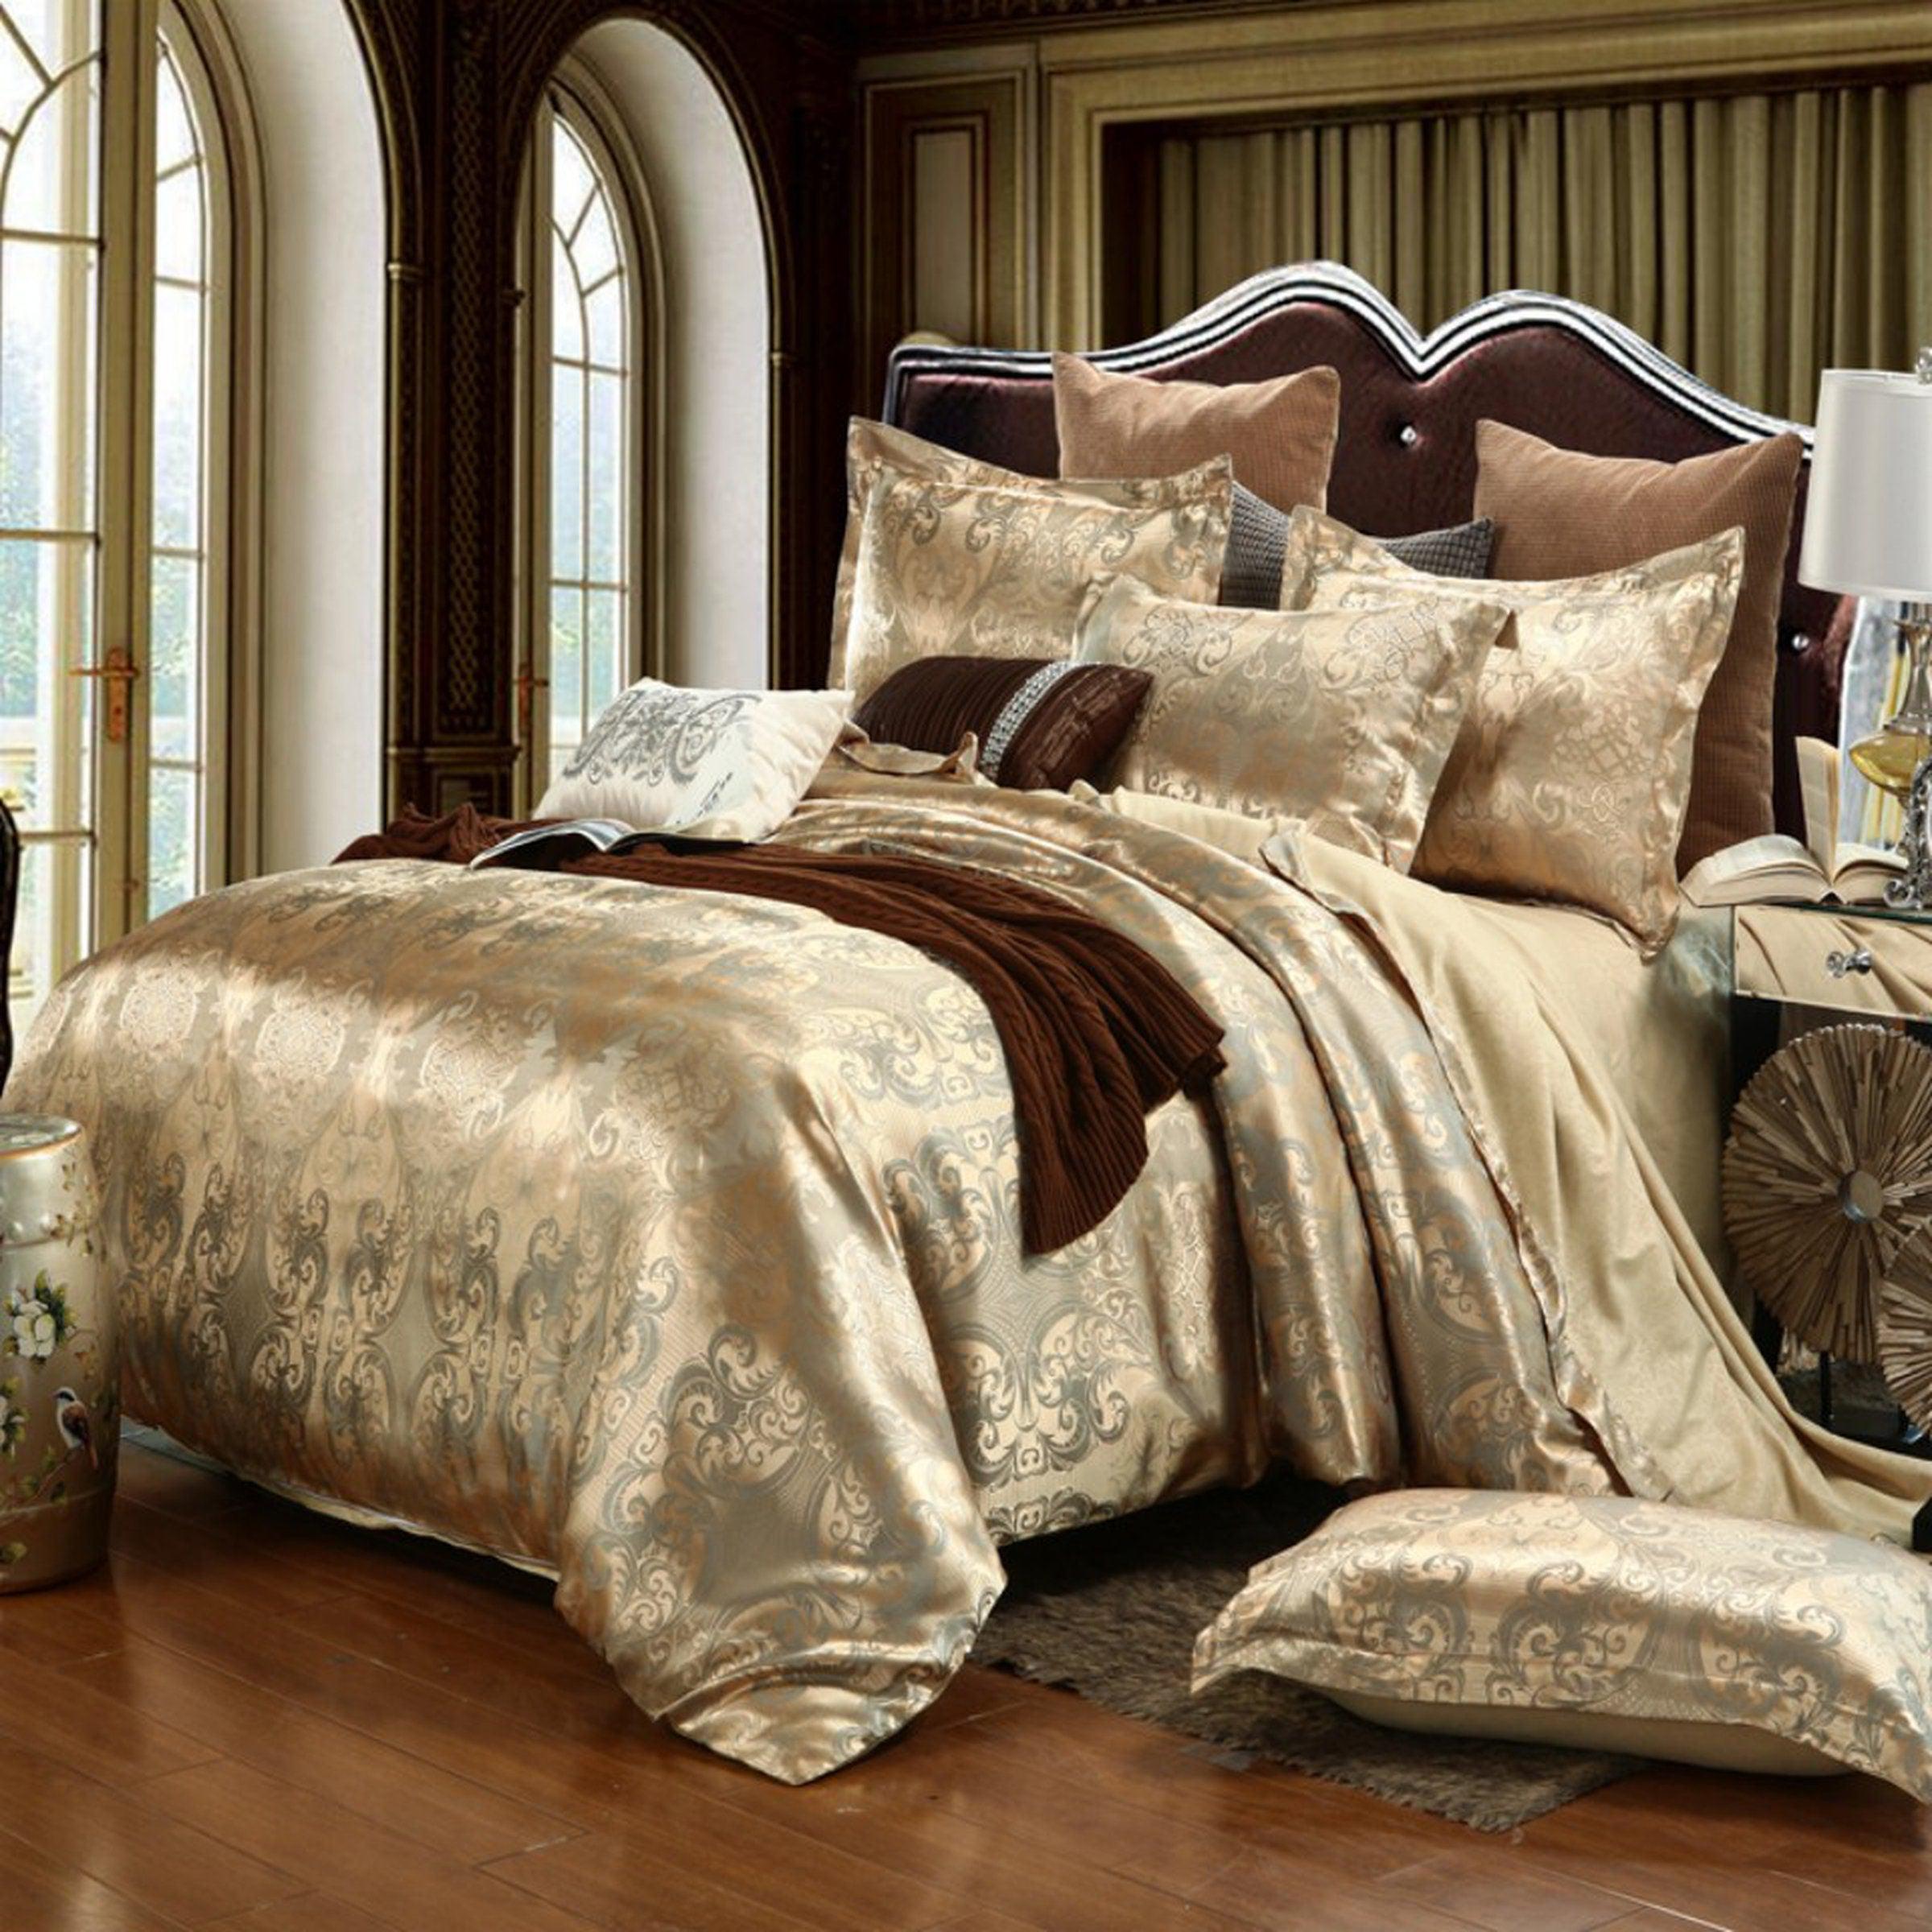 daintyduvet Luxury Gold Duvet Cover Set, Jacquard Fabric Aesthetic Bedding Decorative, Embroidered Bedding Set